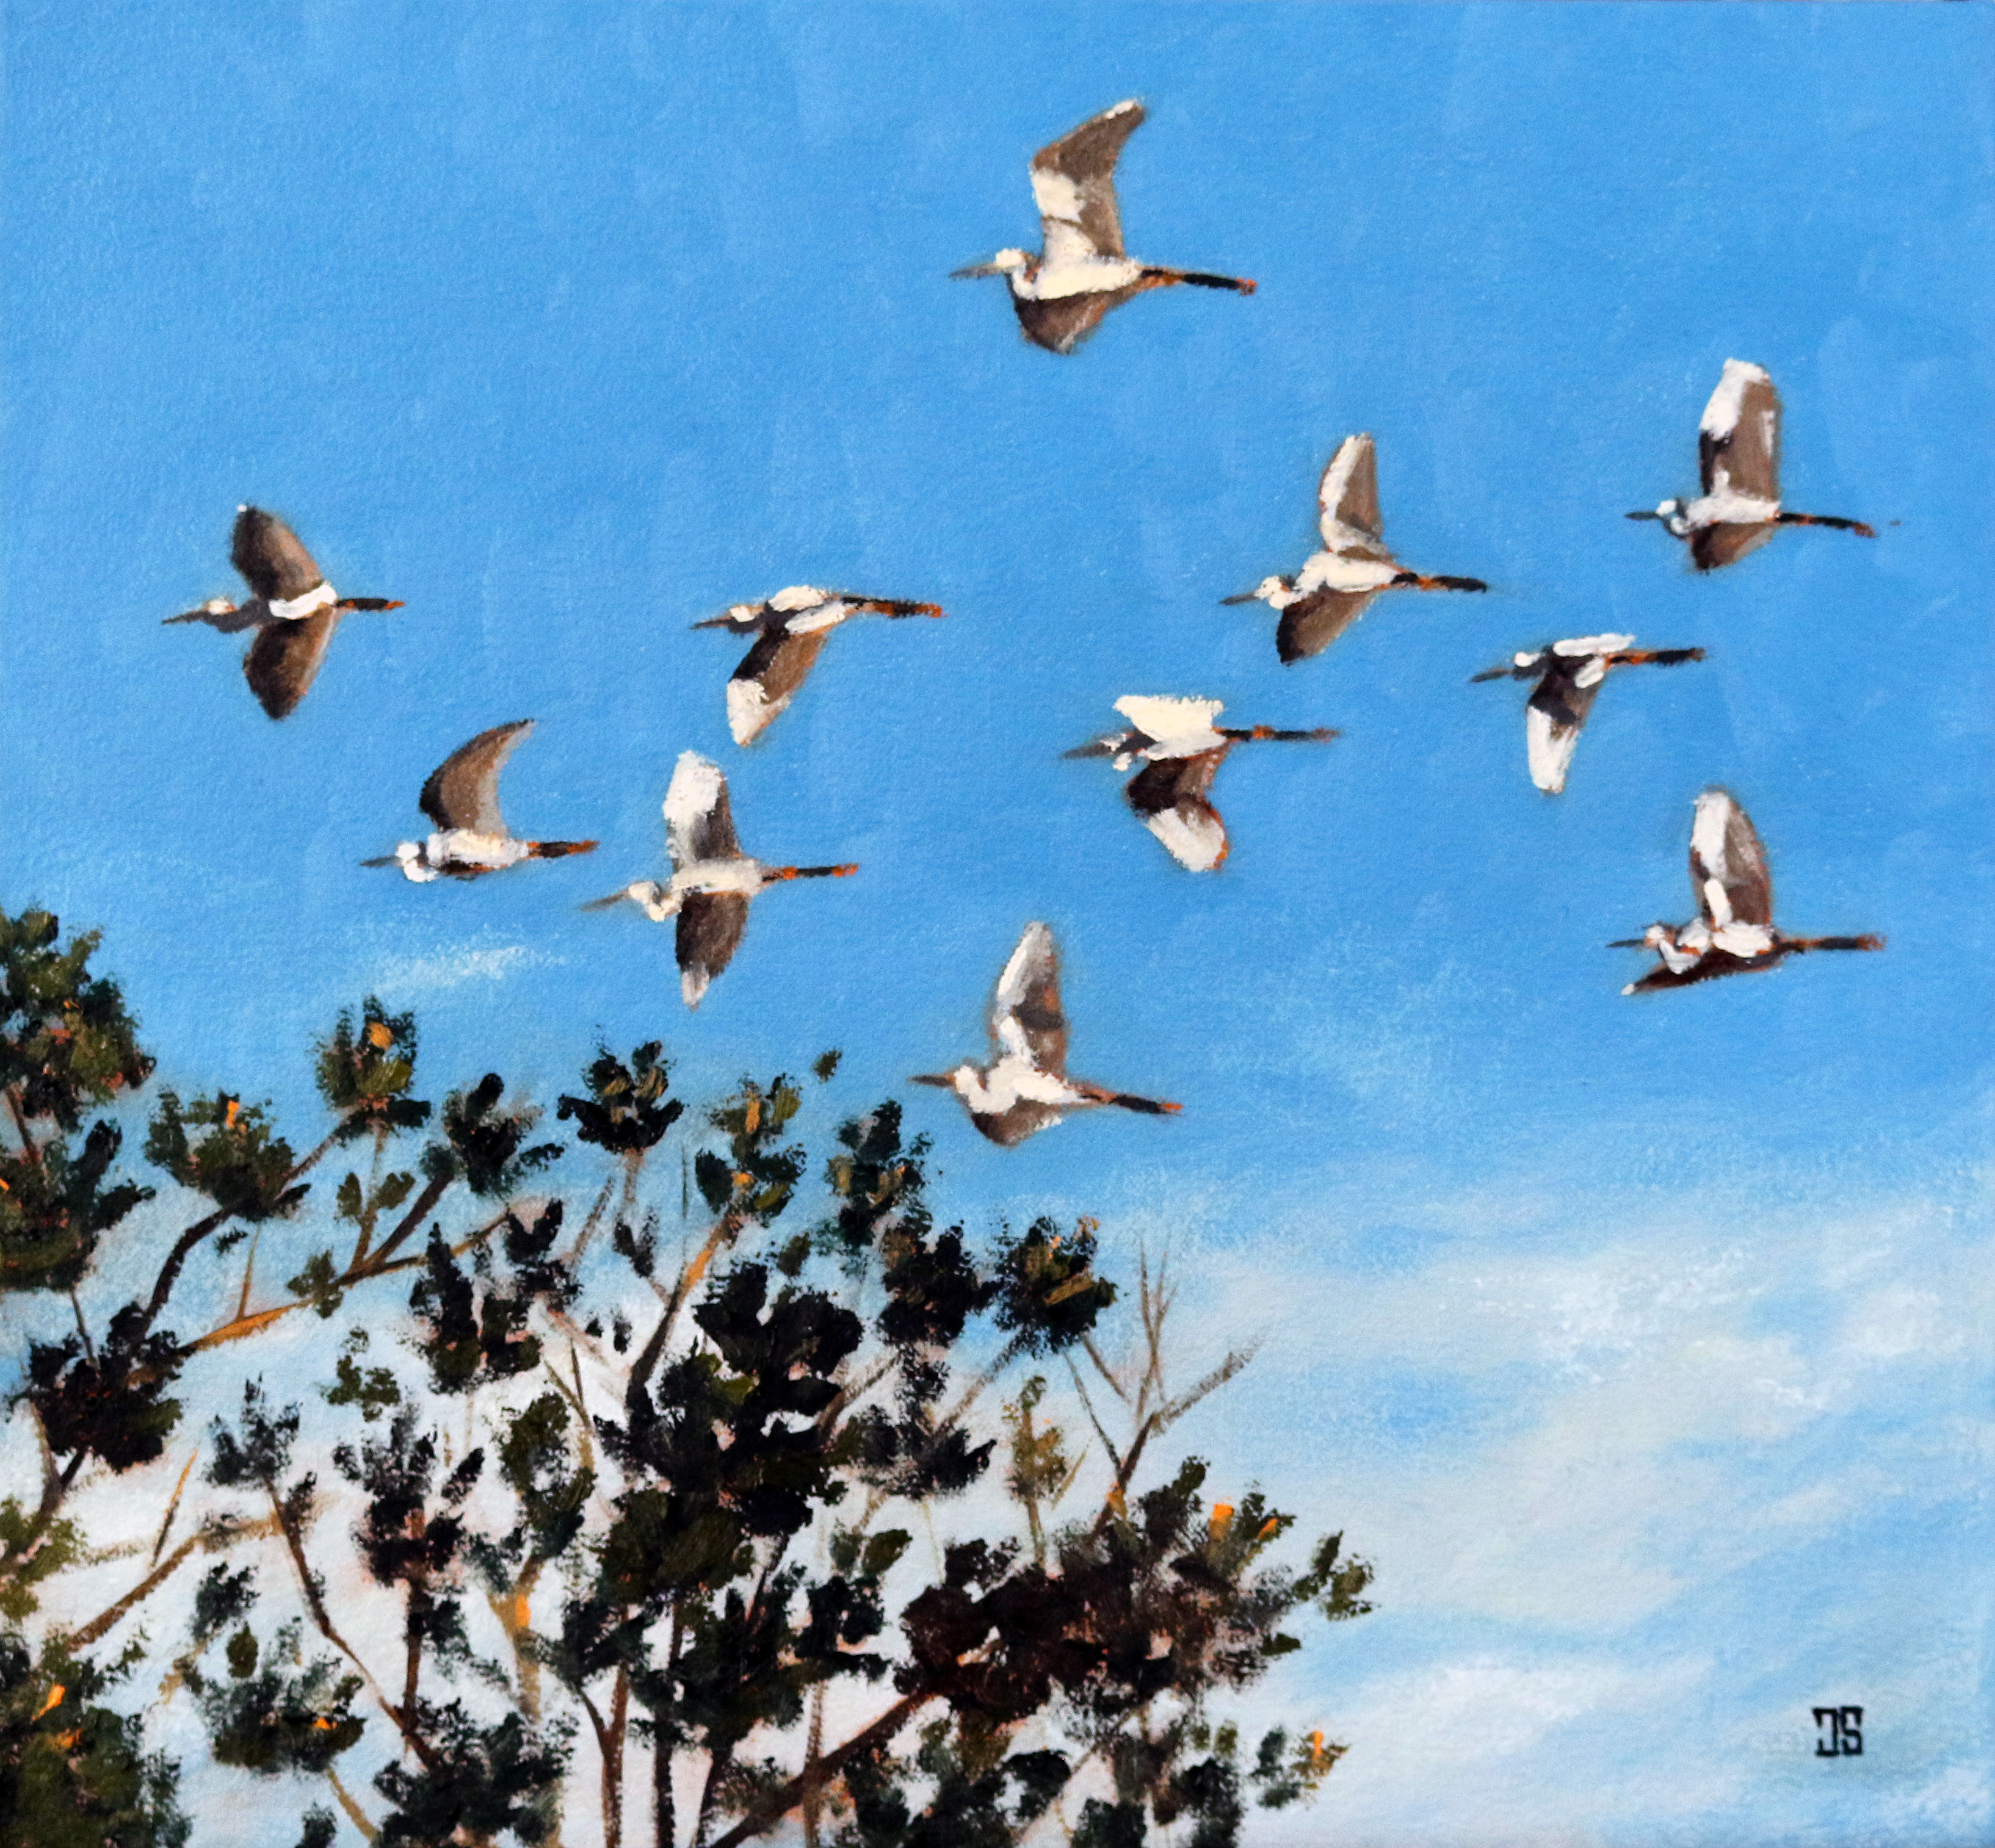 Oil painting "Great Egrets in Flight" by Jeffrey Dale Starr